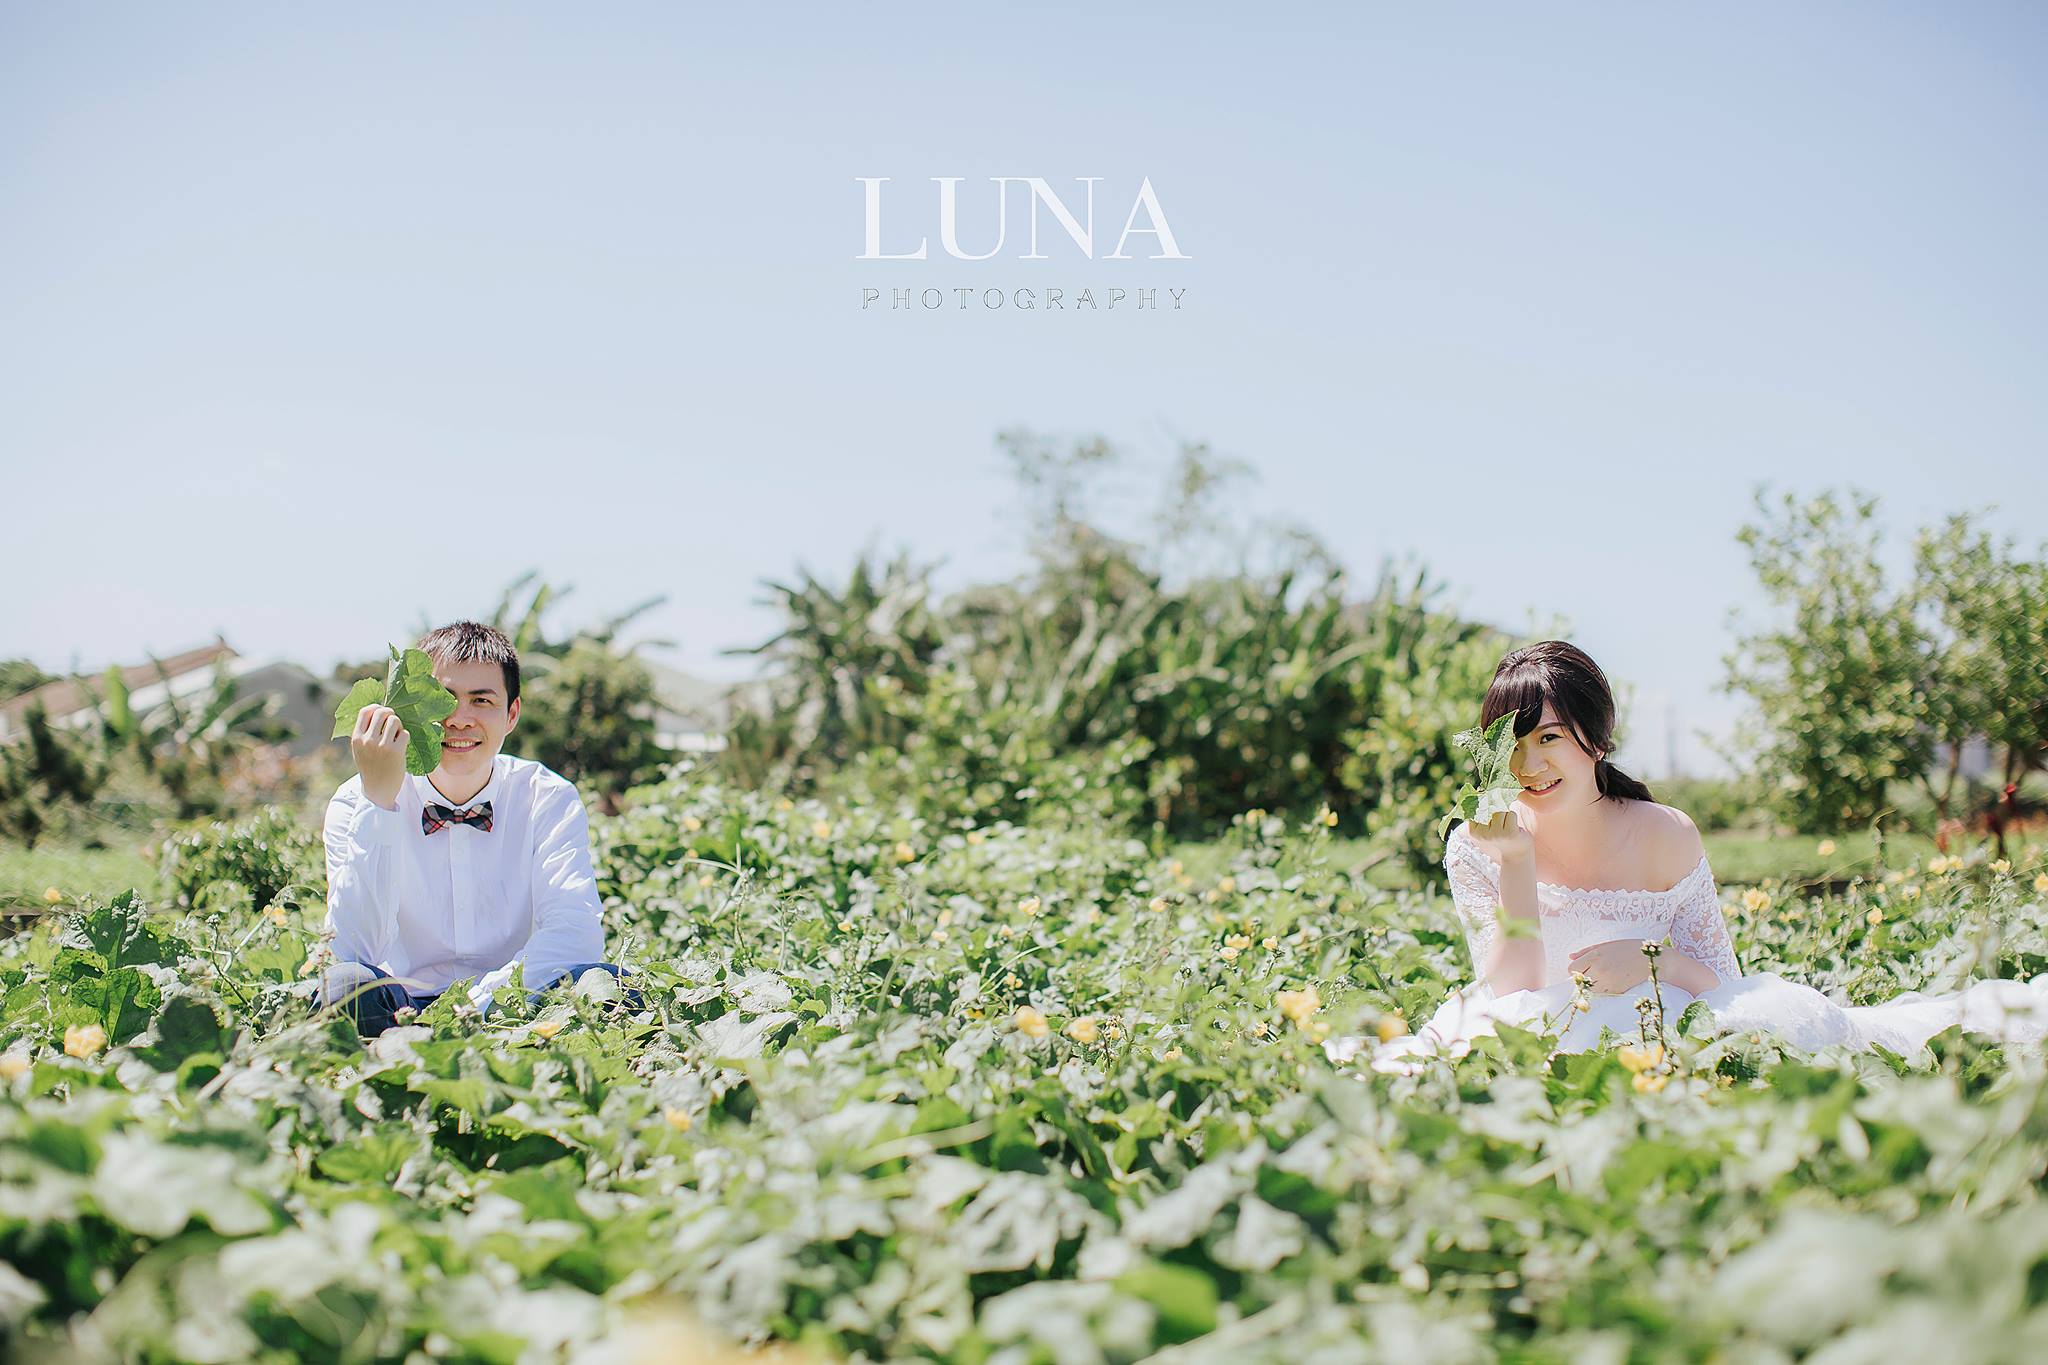 Luna Photography。女攝影師Luna / 嬿勻 & 信熹 婚紗照分享